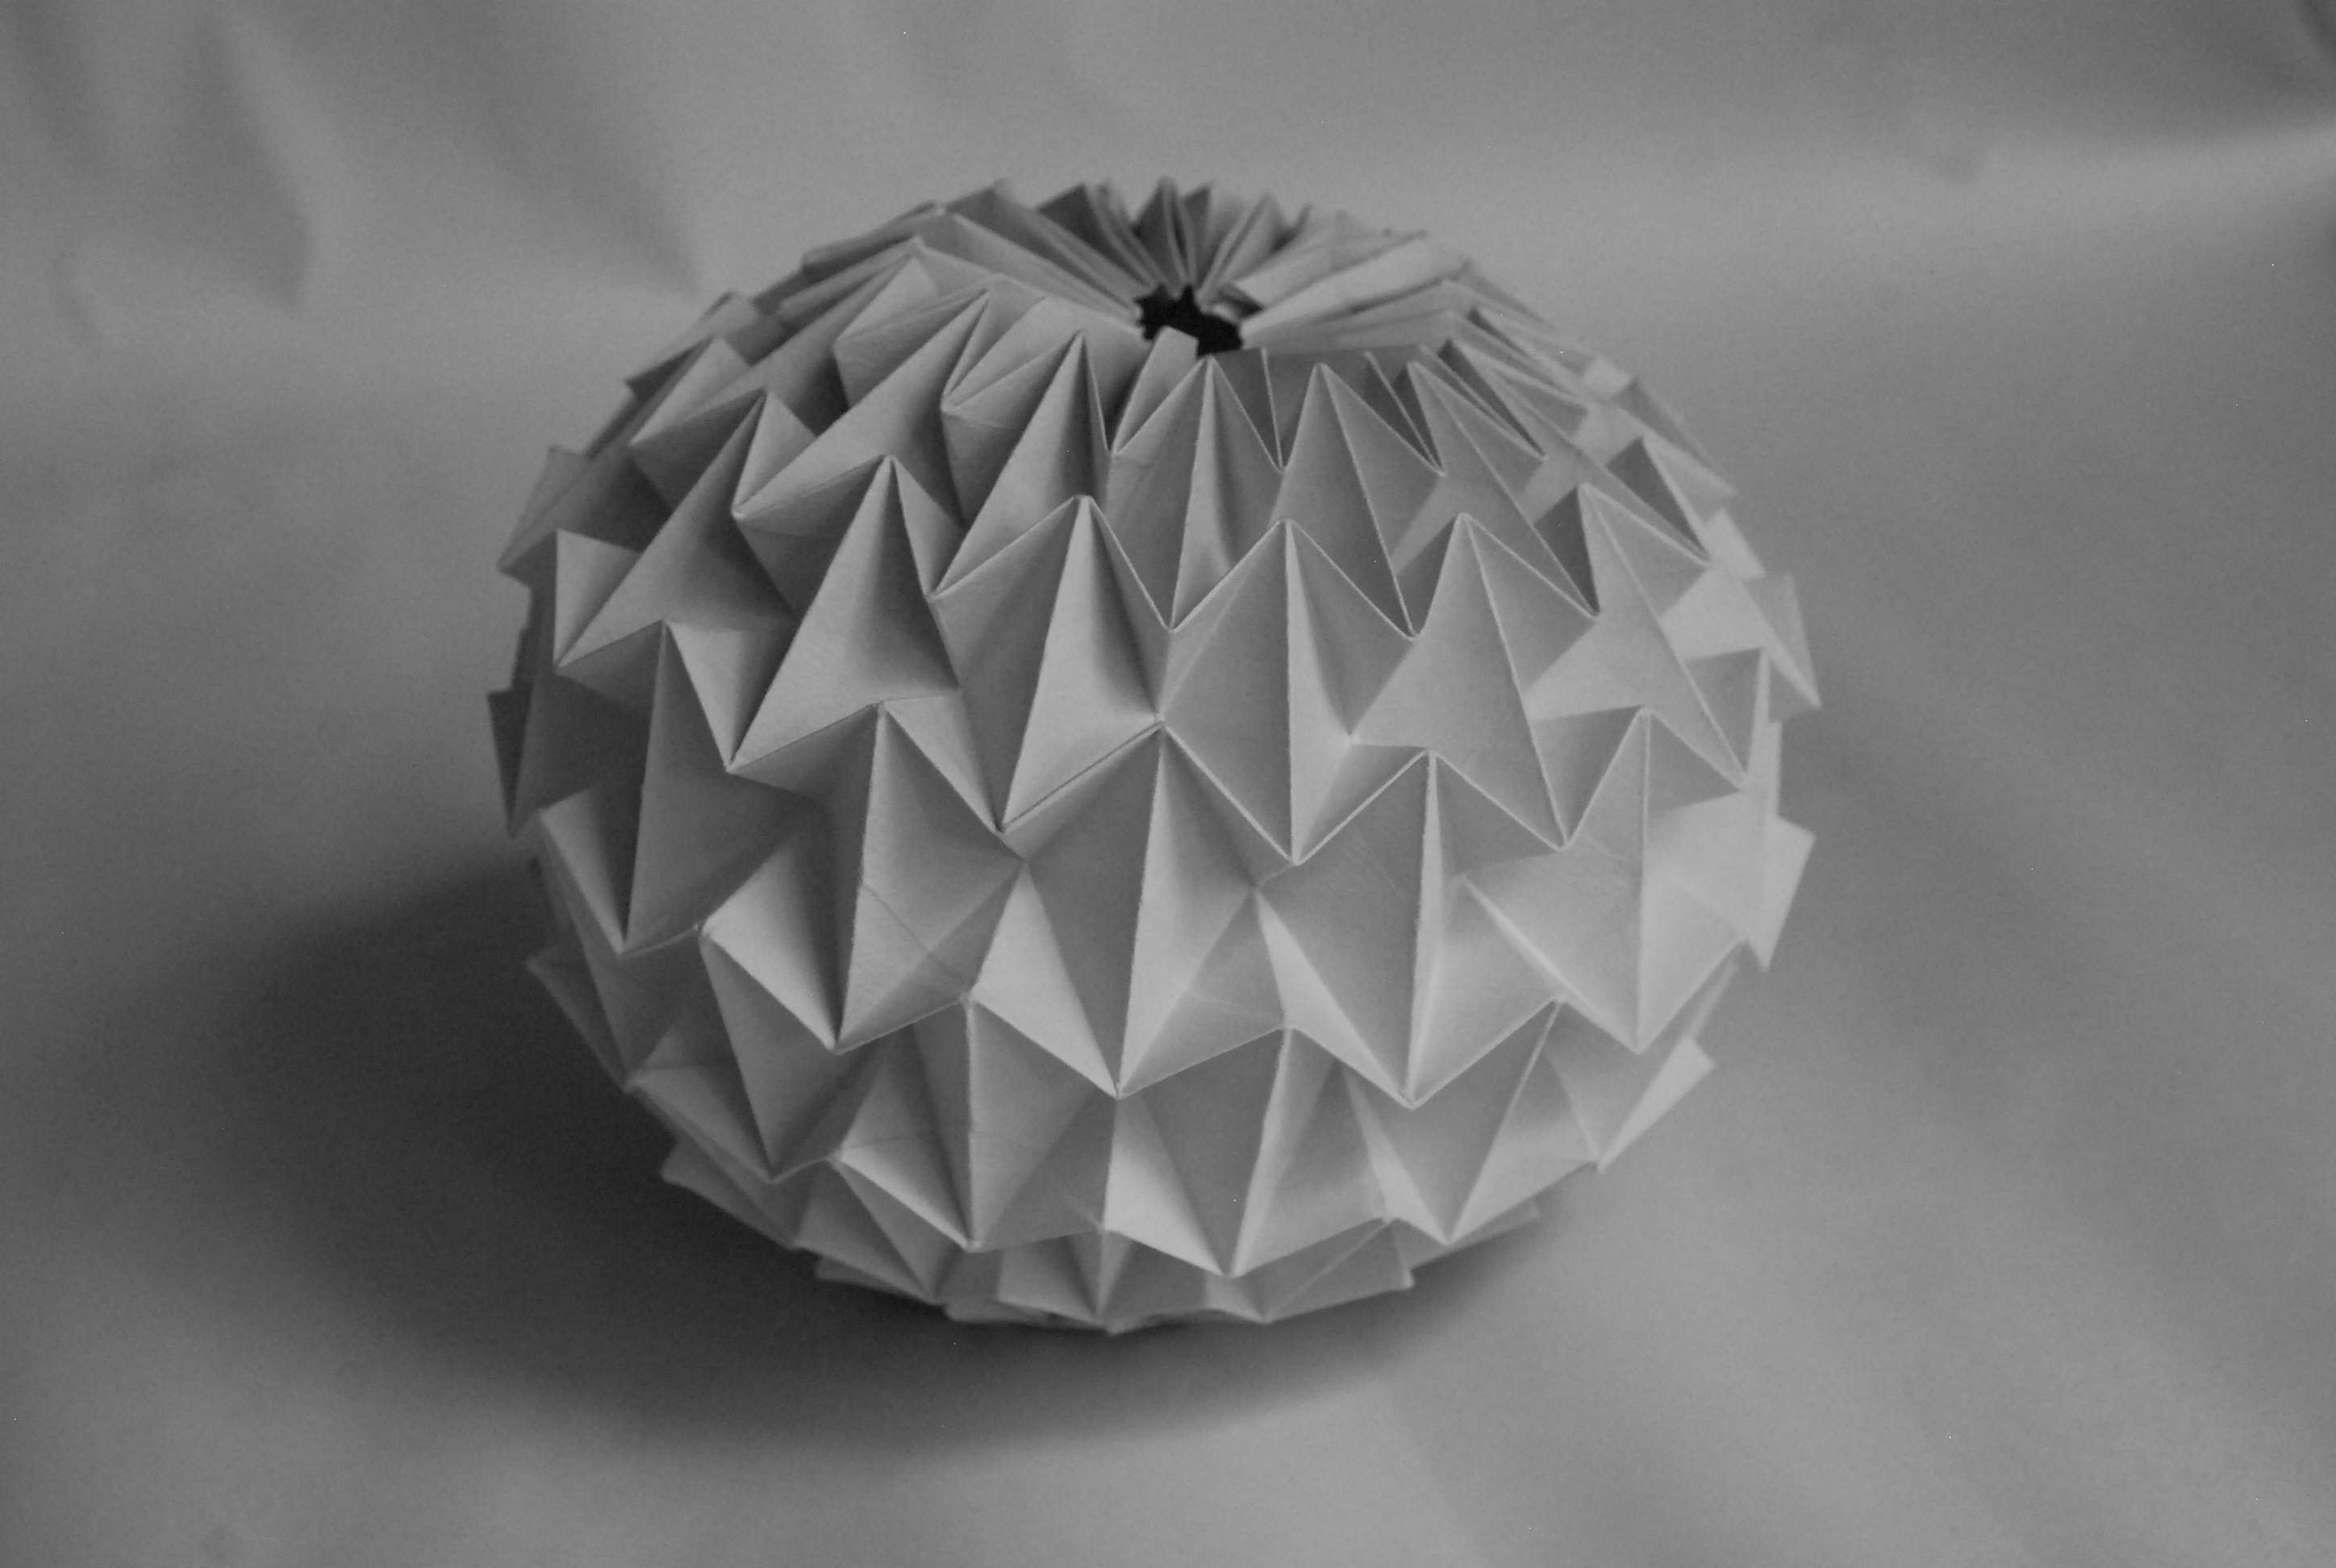 Origami Magic Ball | Boon's Origami Blog